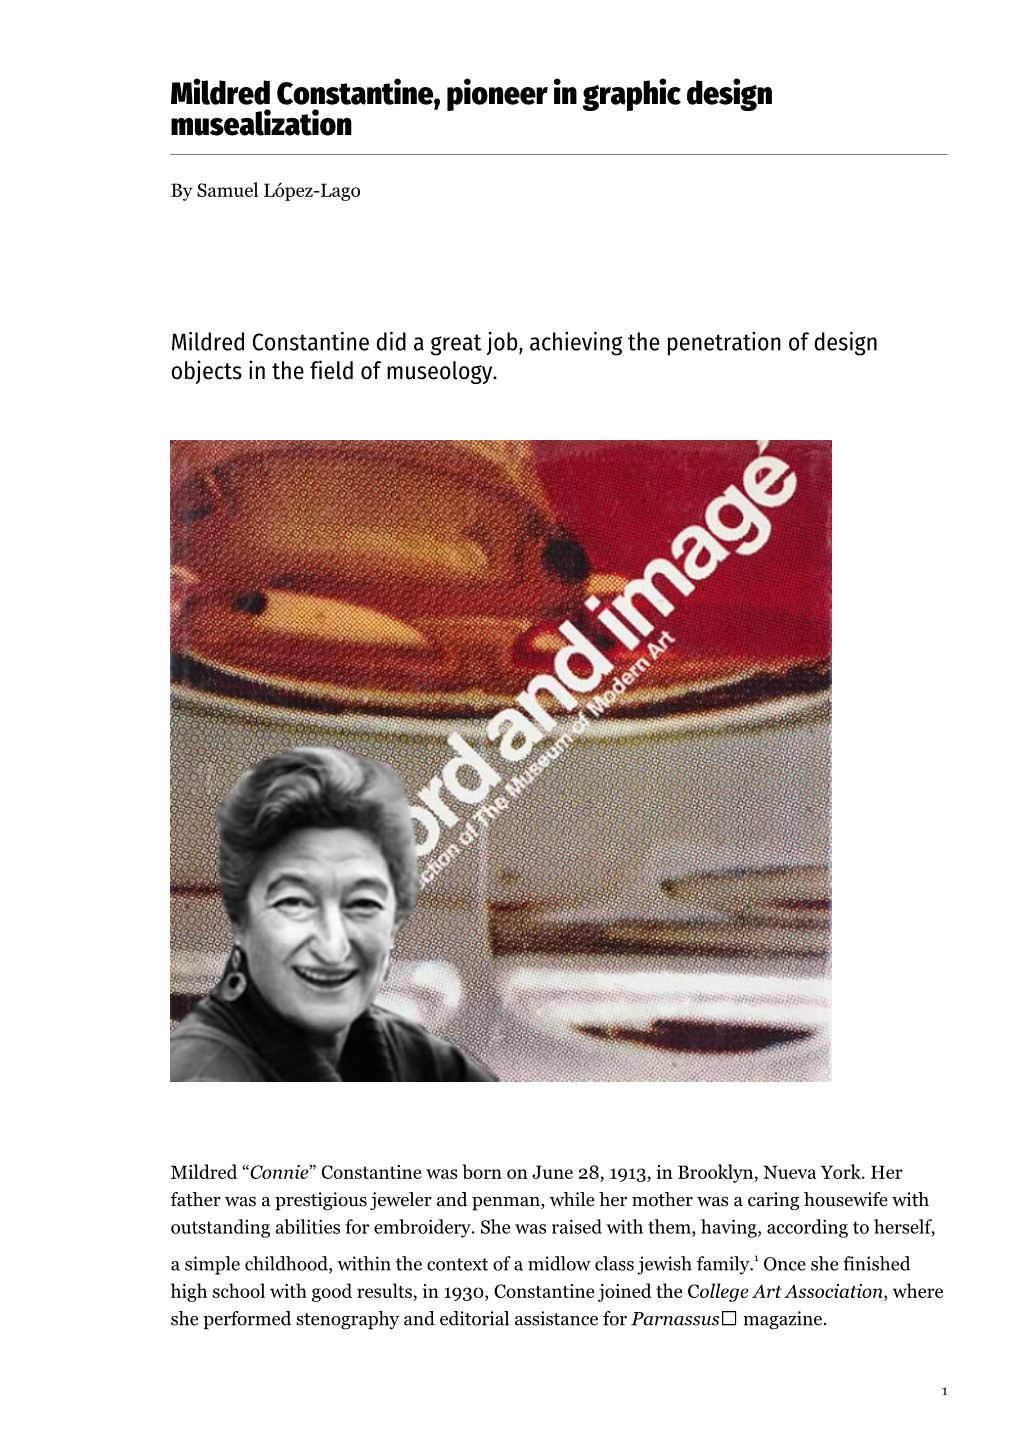 Mildred Constantine, Pioneer in Graphic Design Musealization